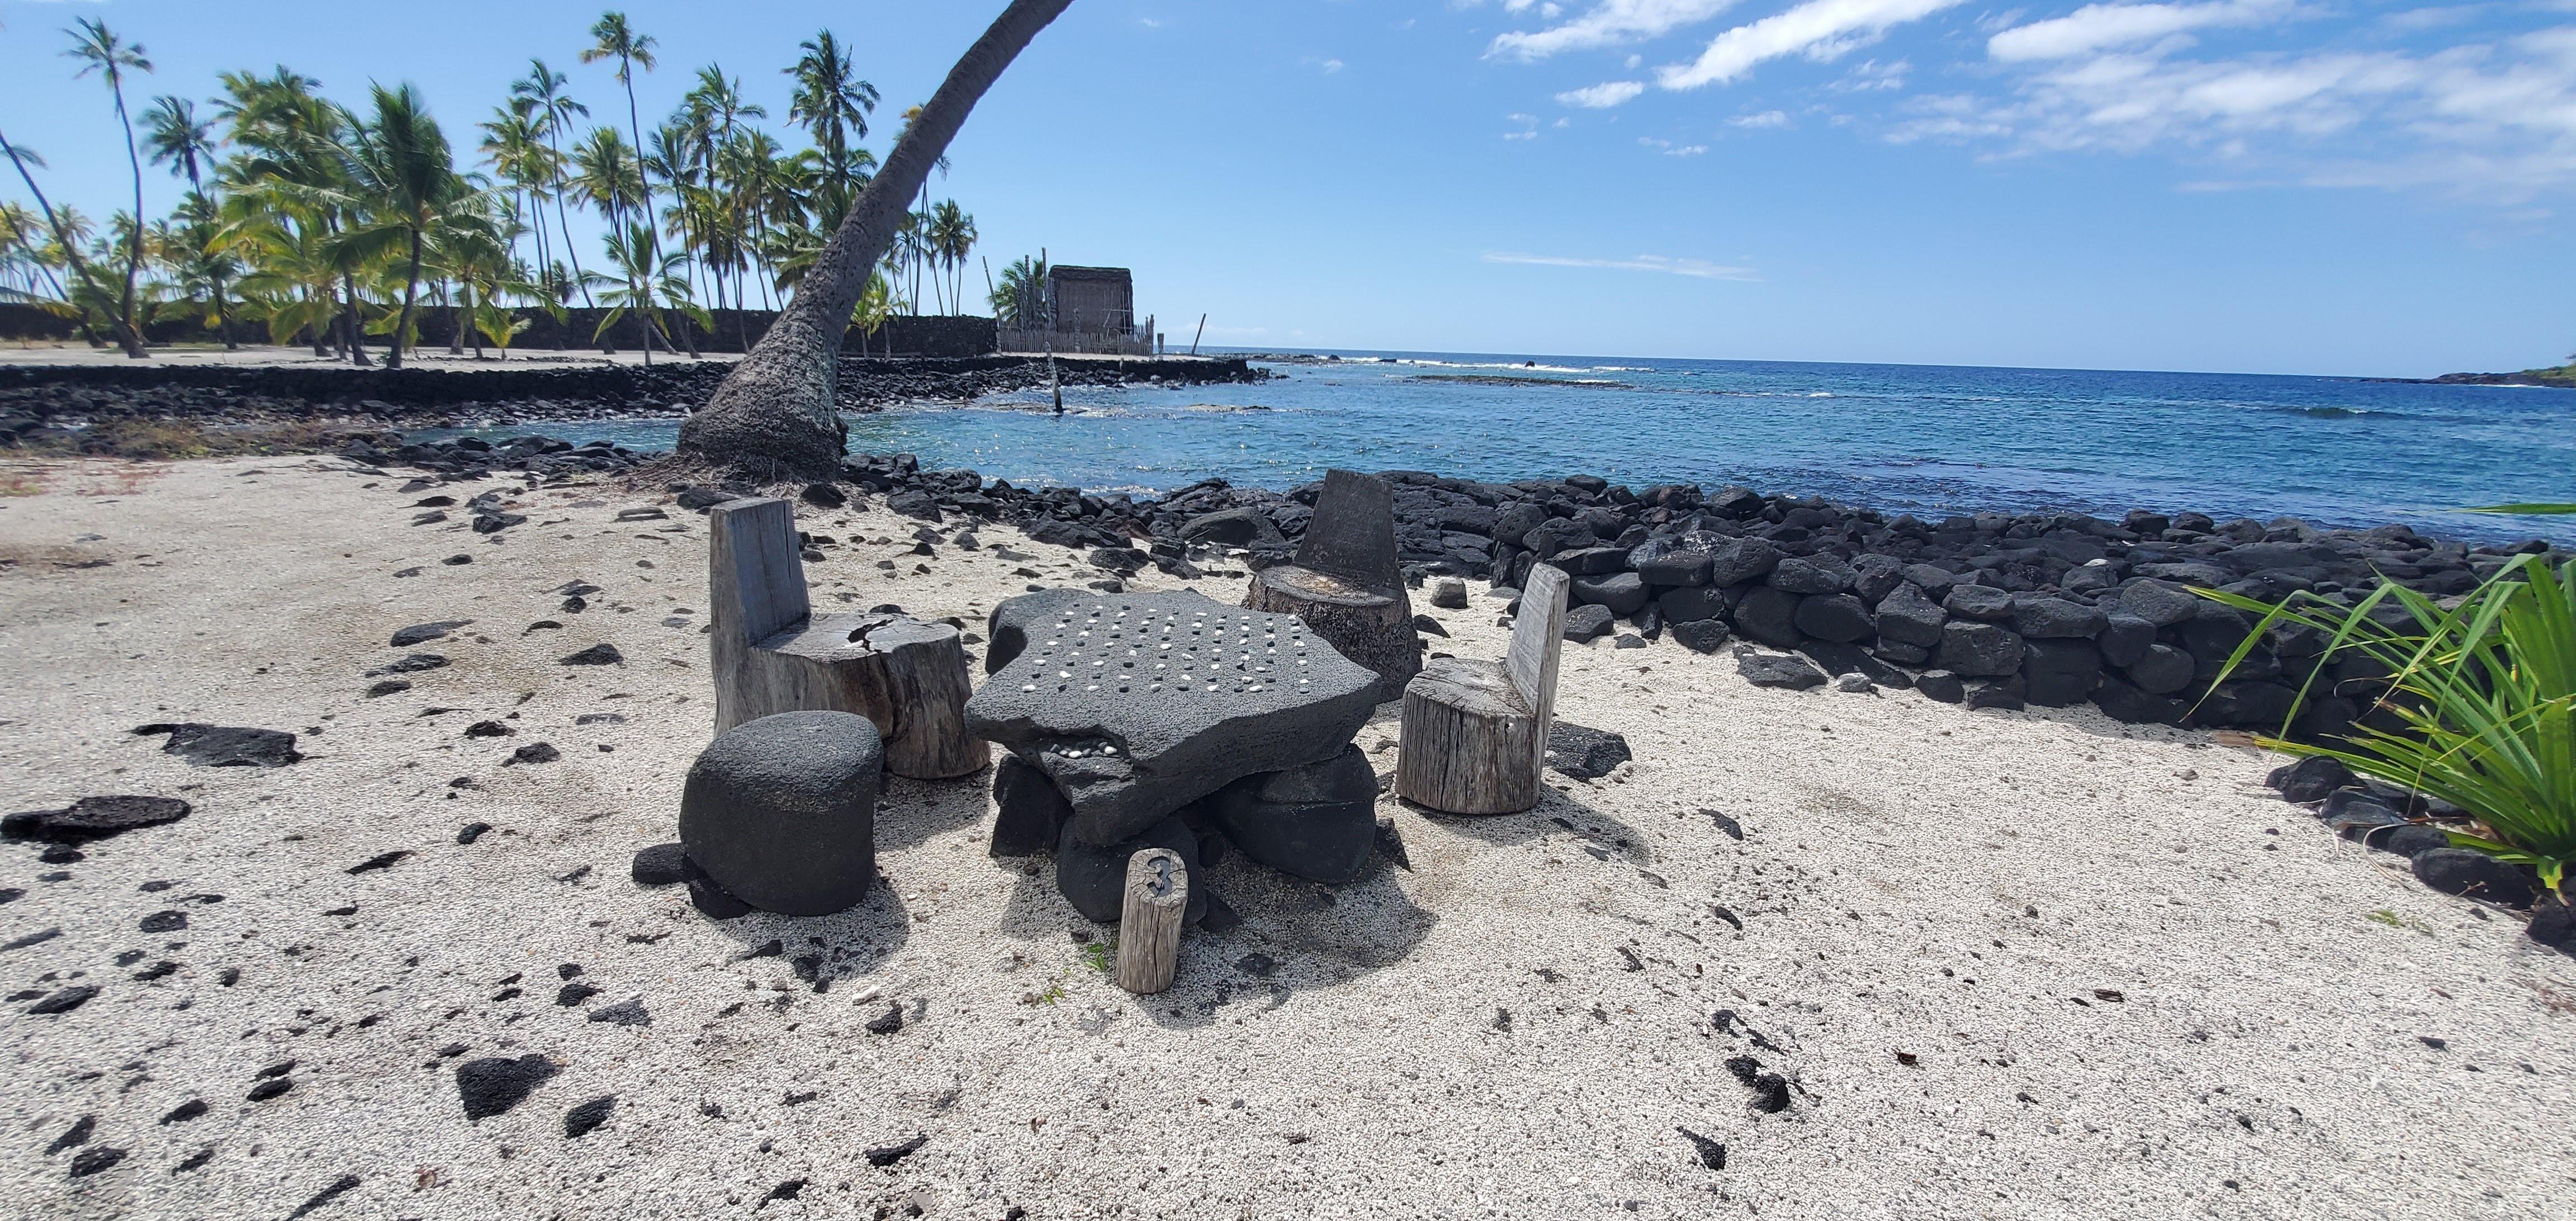 A stone papamū (Kōnane playing surface) with Hale o Keawe and Hōnaunau Bay in the background.